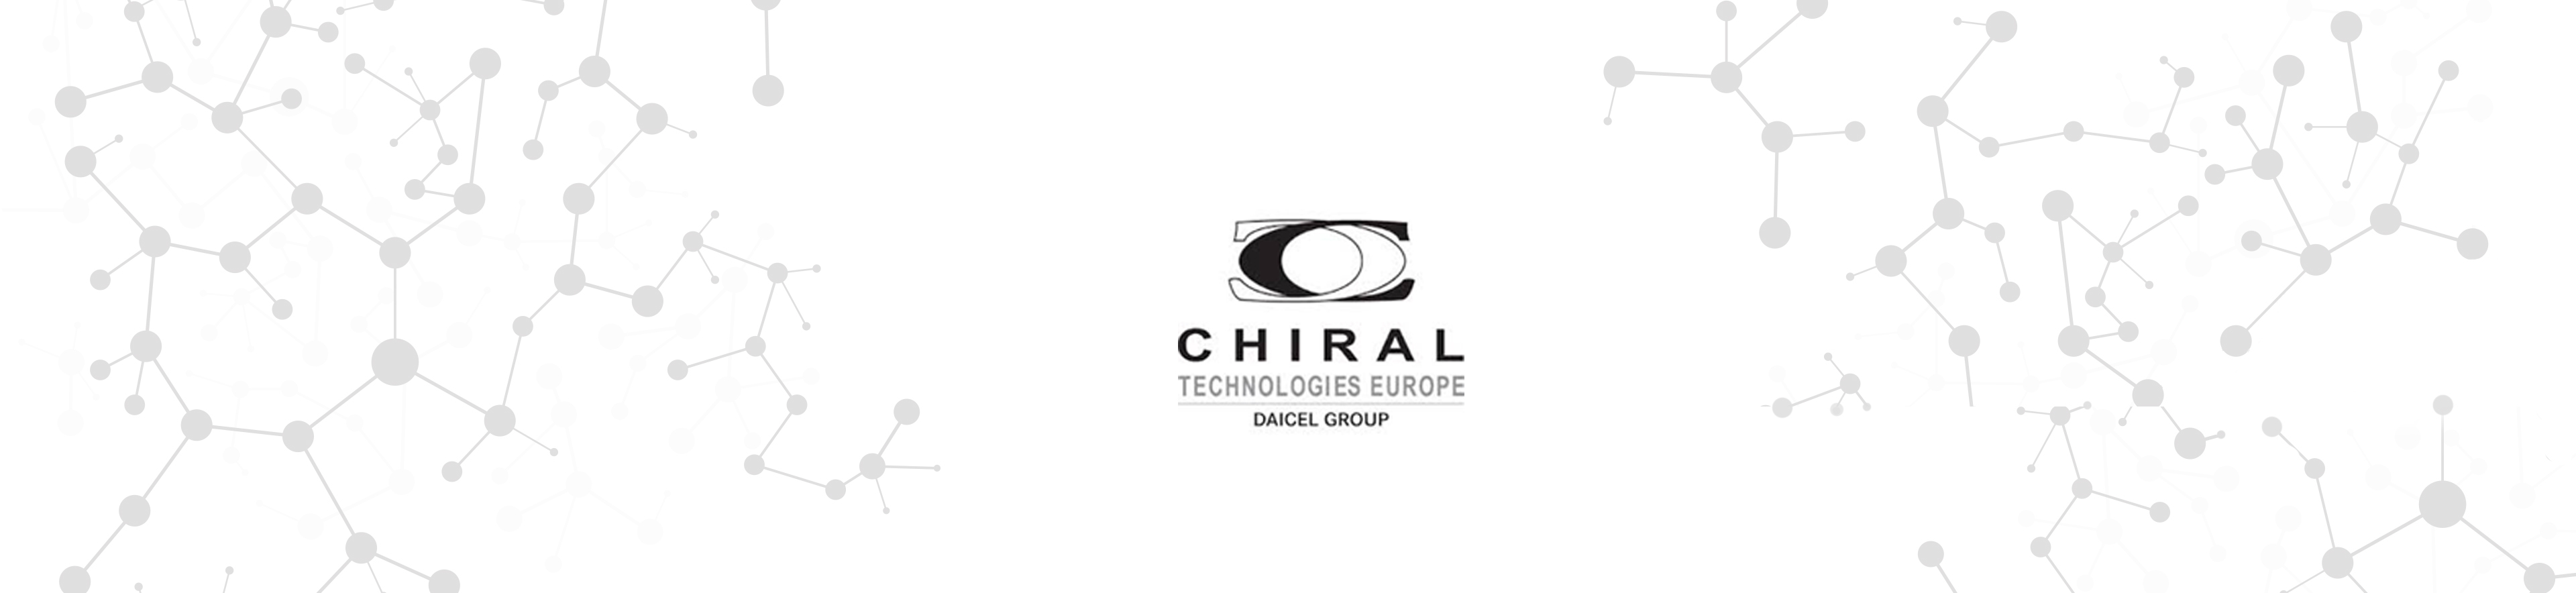 Daicel Chiral Technologies